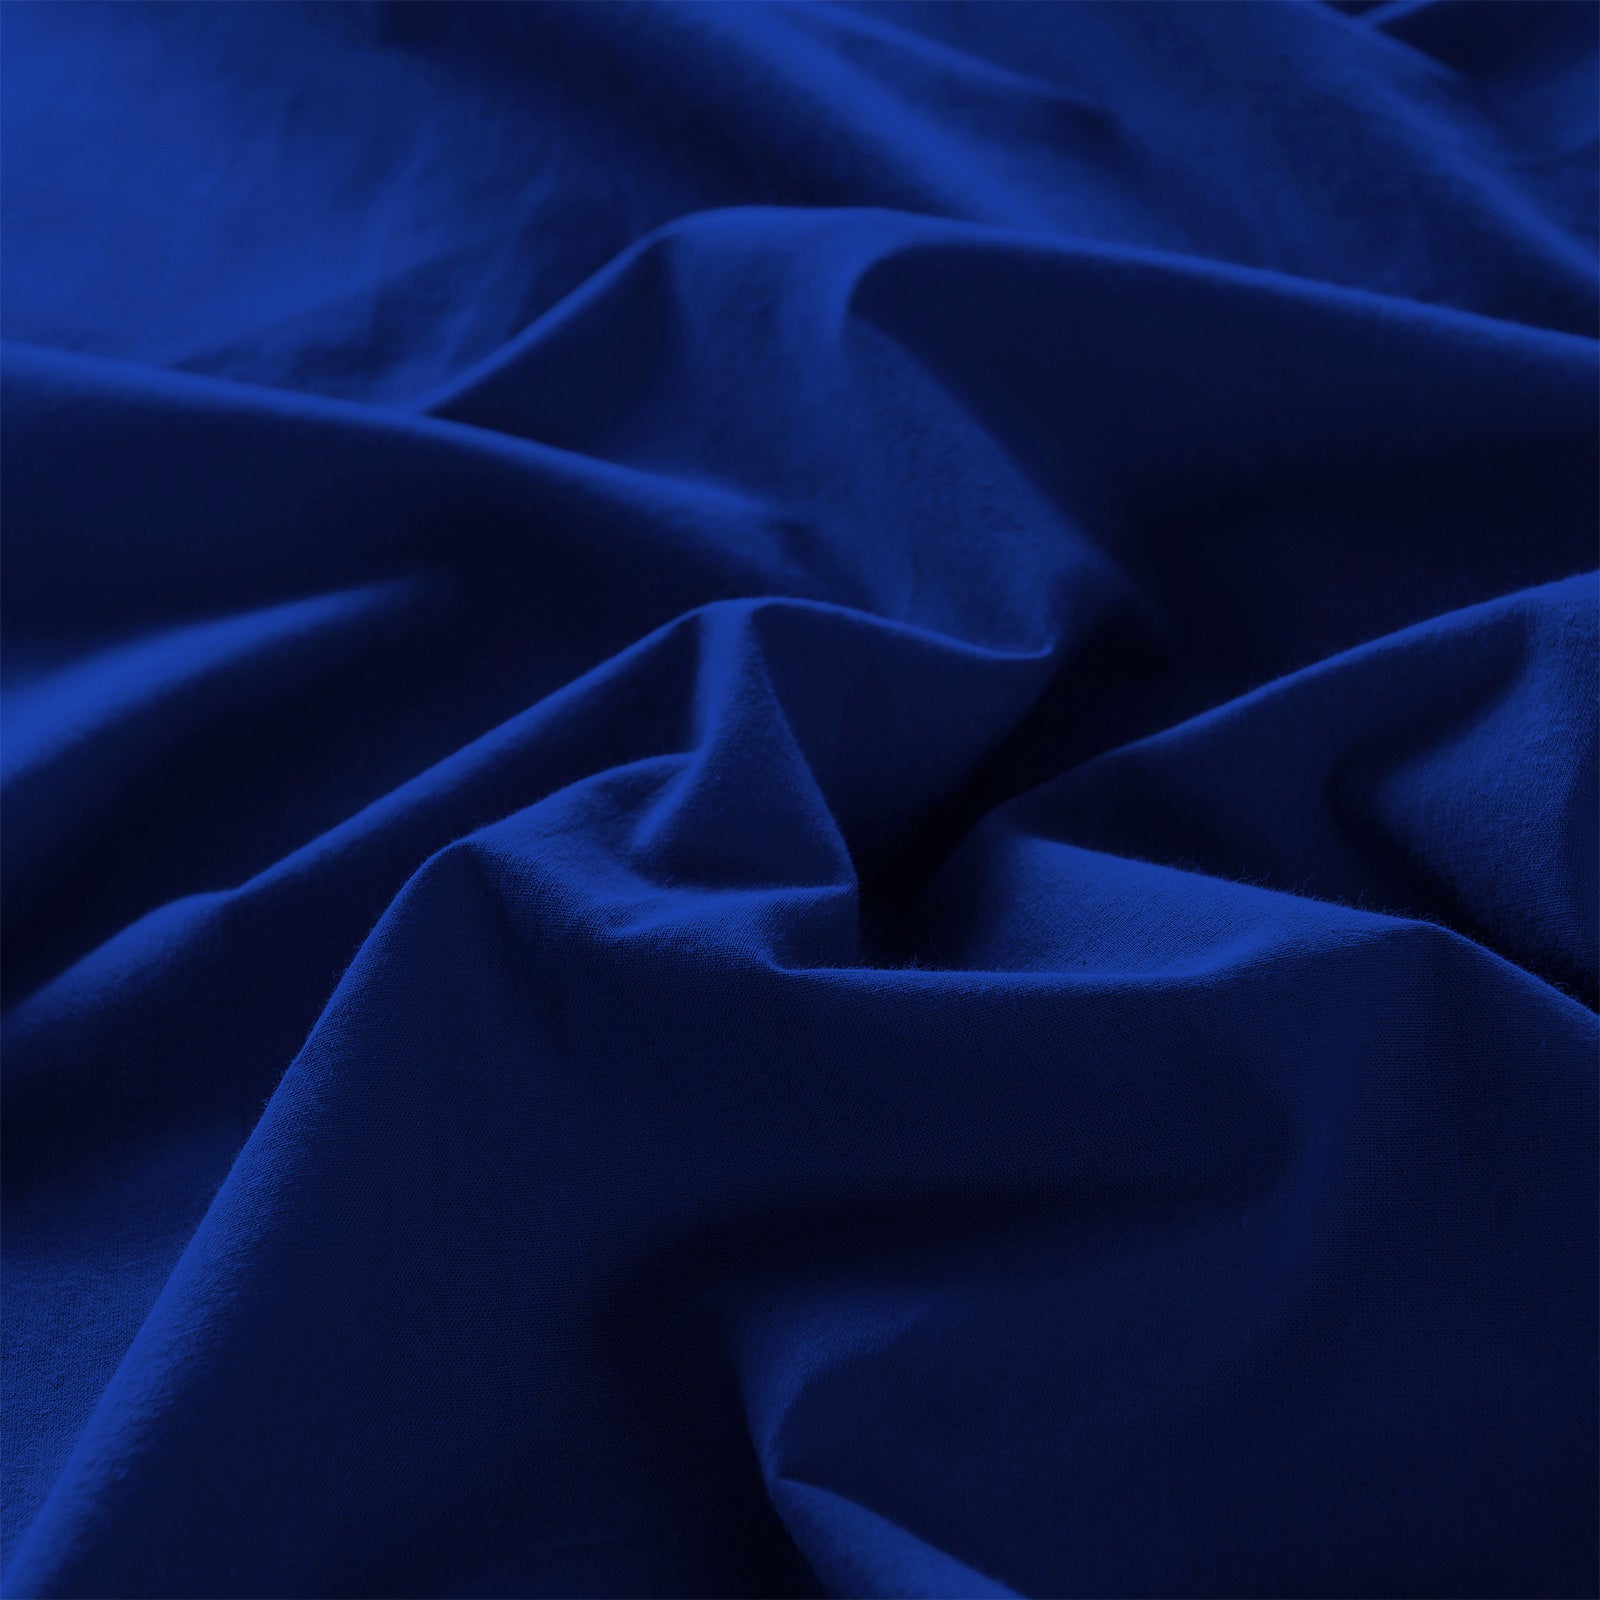 Royal Comfort Vintage Washed 100 % Cotton Sheet Set Double - Royal Blue